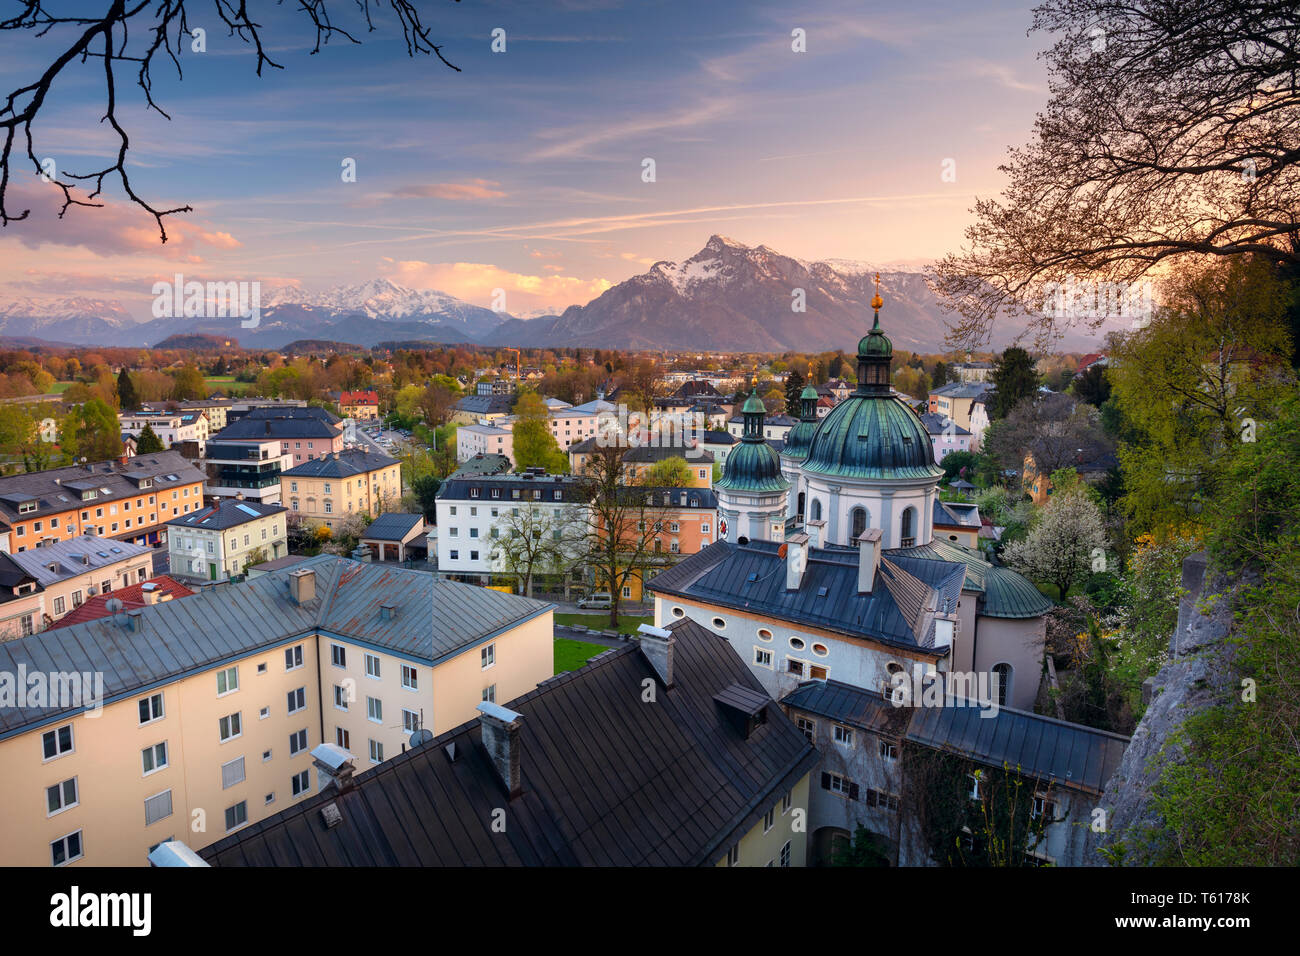 Salzburg, Austria.Cityscape image of the Salzburg, Austria during spring sunset. Stock Photo